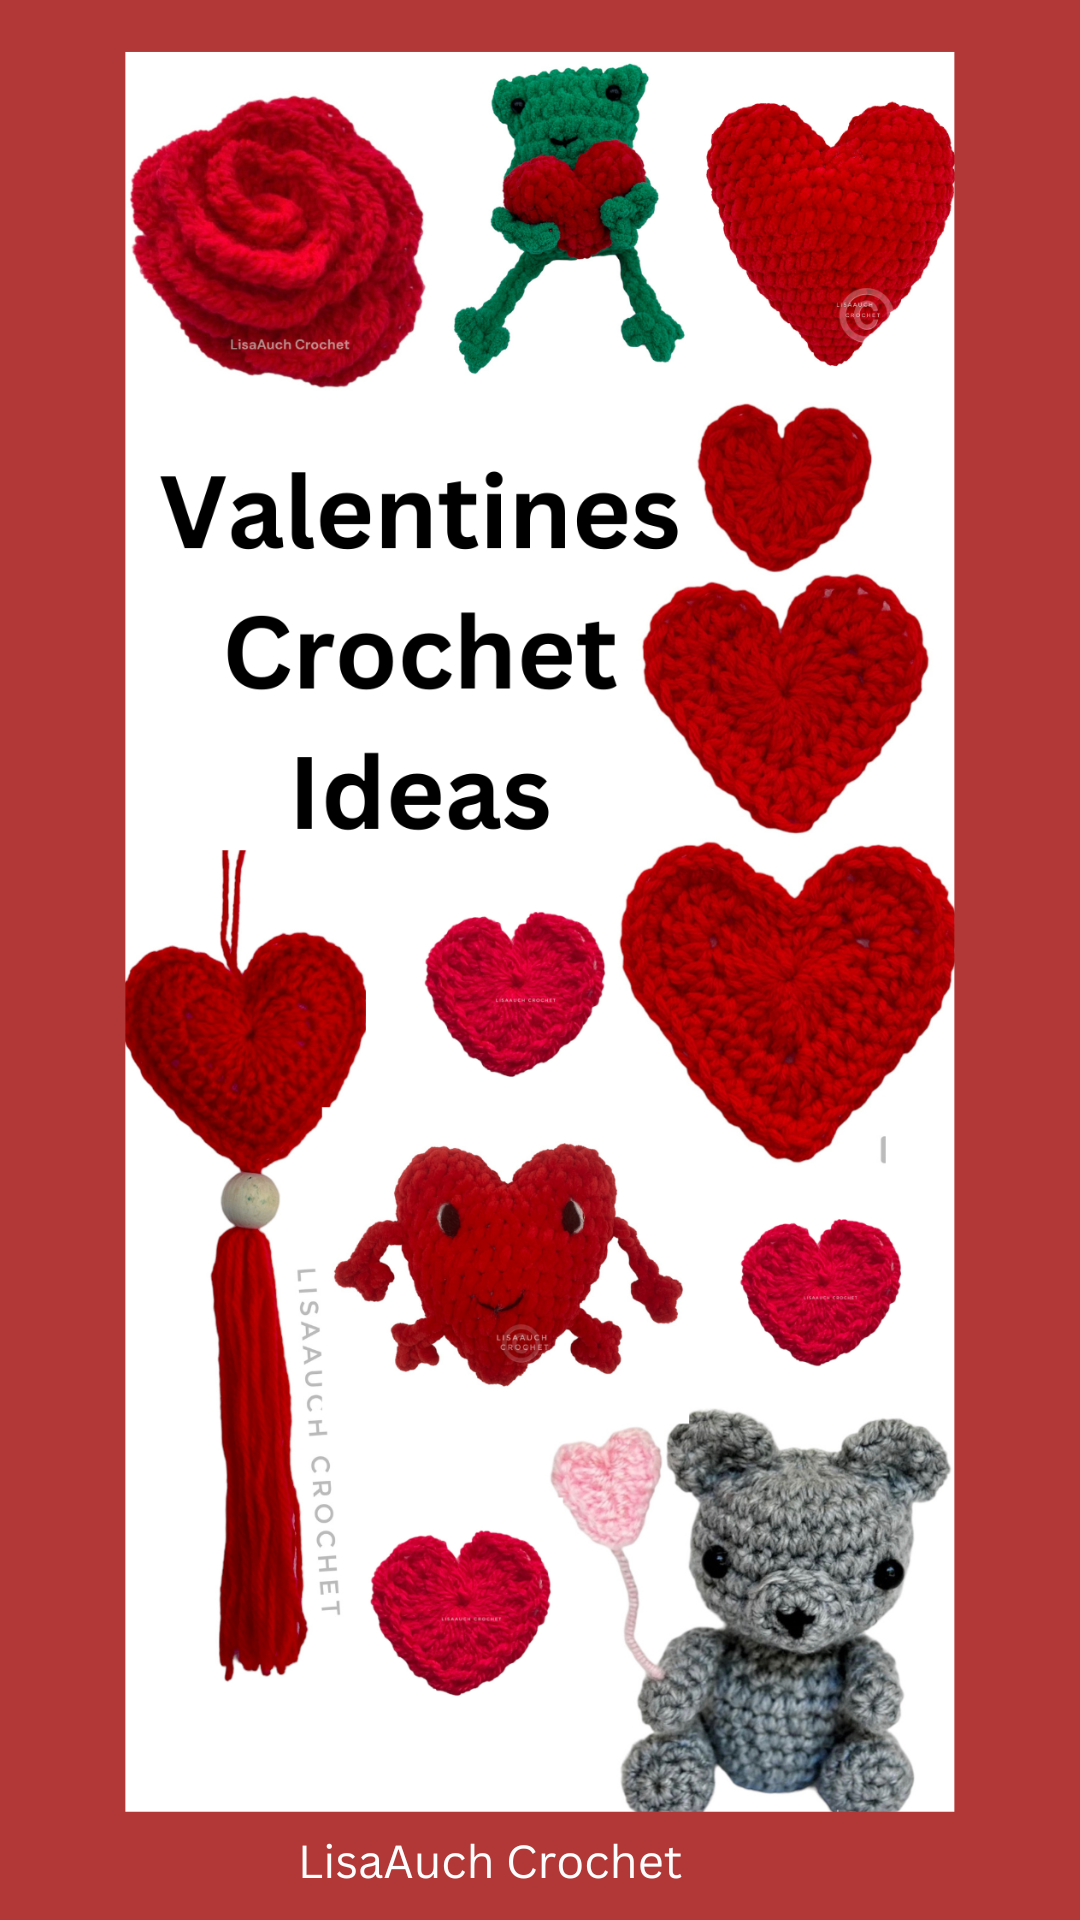 Valentines Crochet Patterns FREE